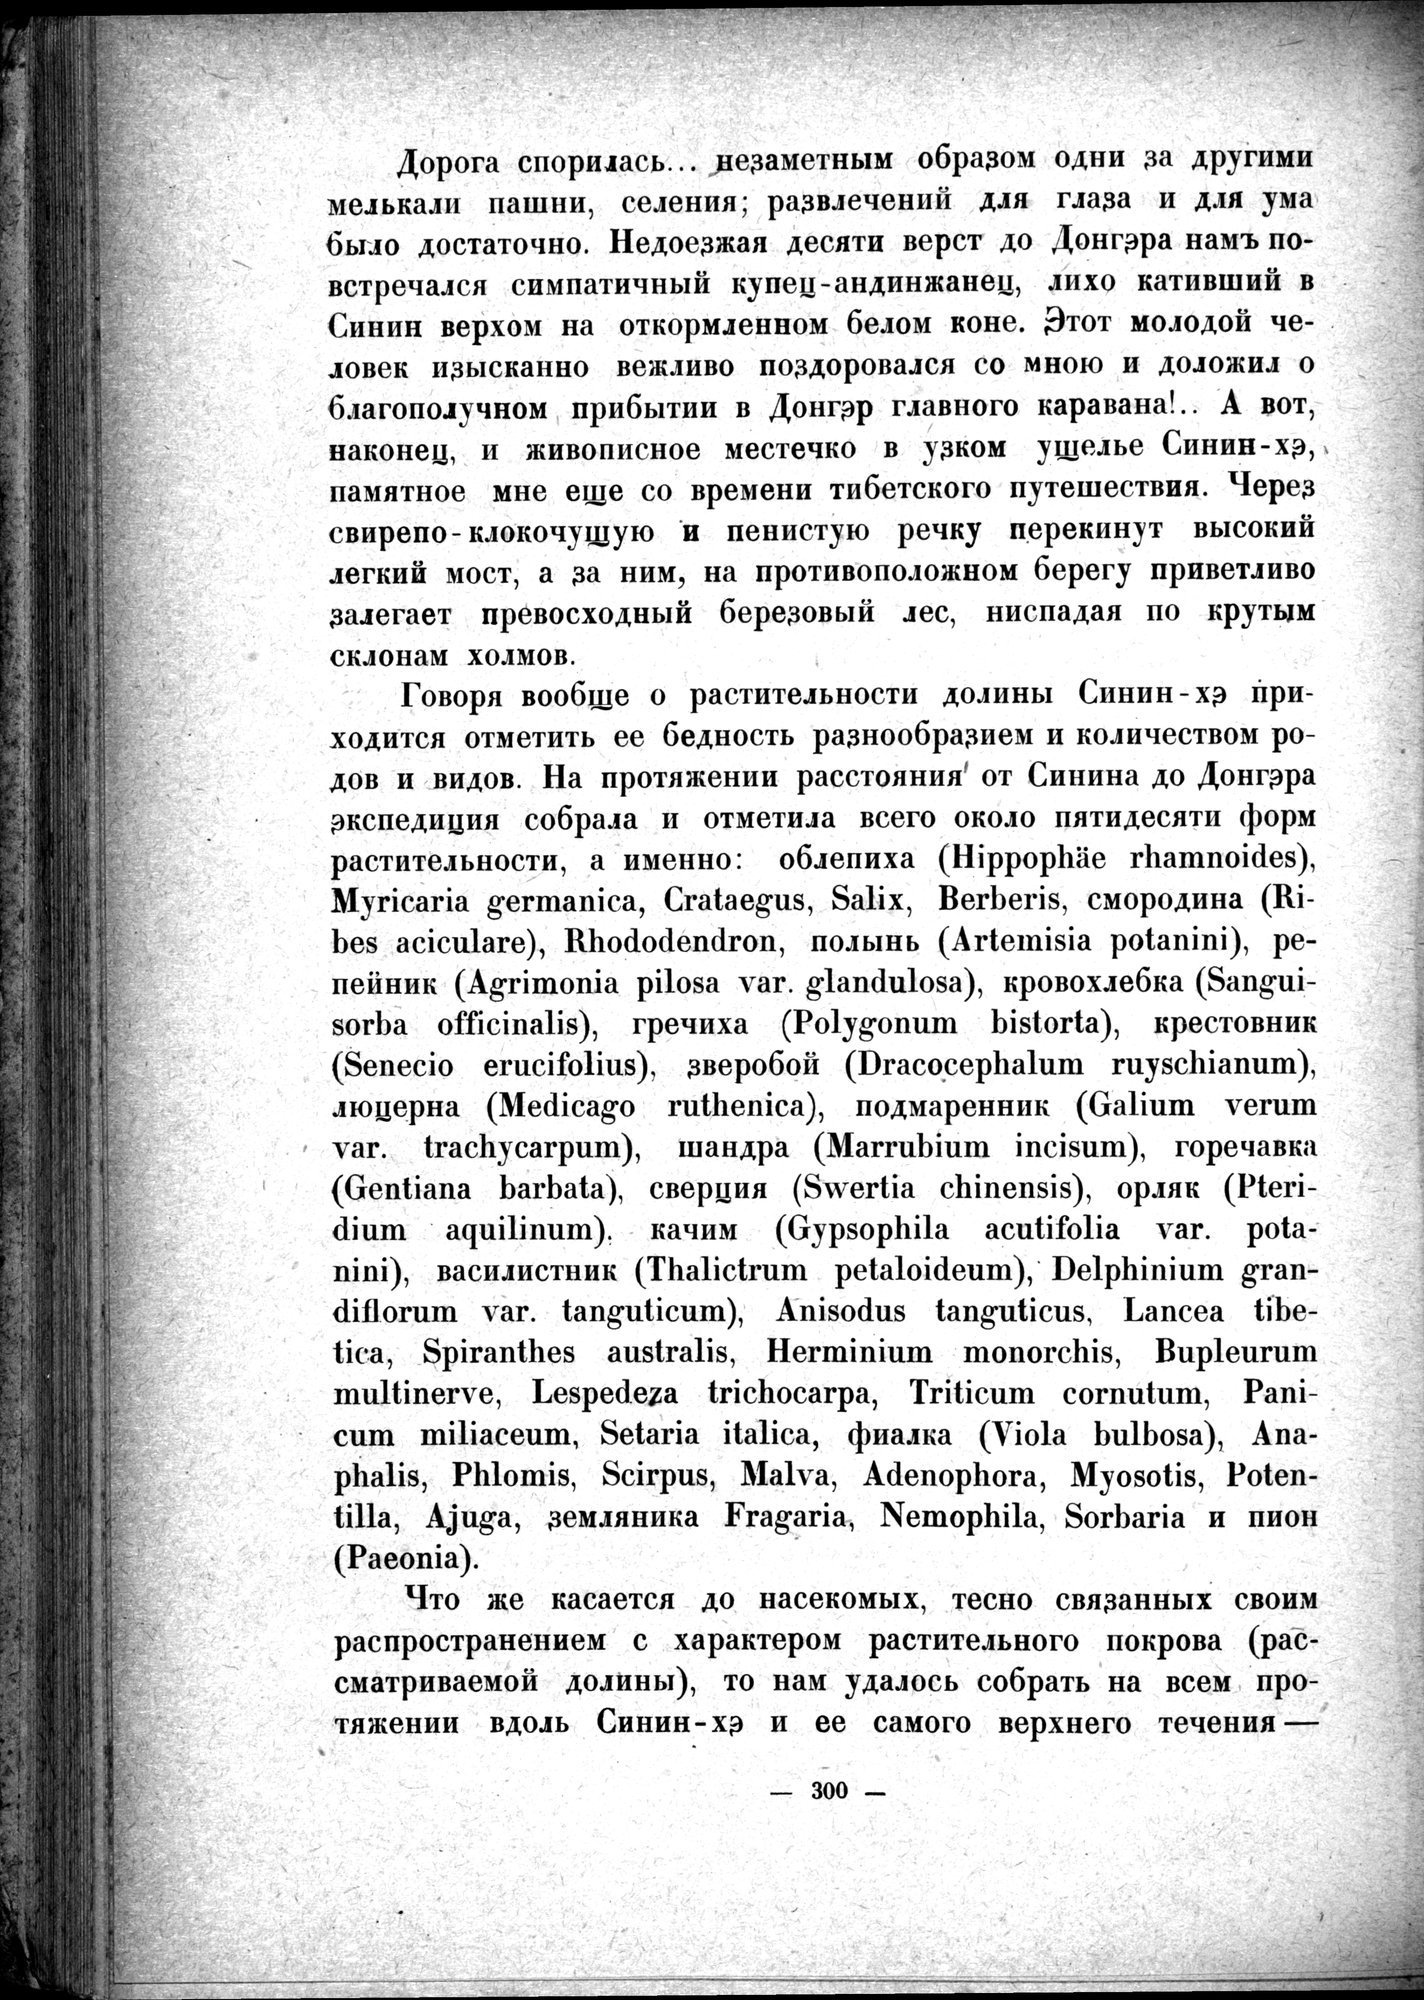 Mongoliya i Amdo i mertby gorod Khara-Khoto : vol.1 / Page 350 (Grayscale High Resolution Image)